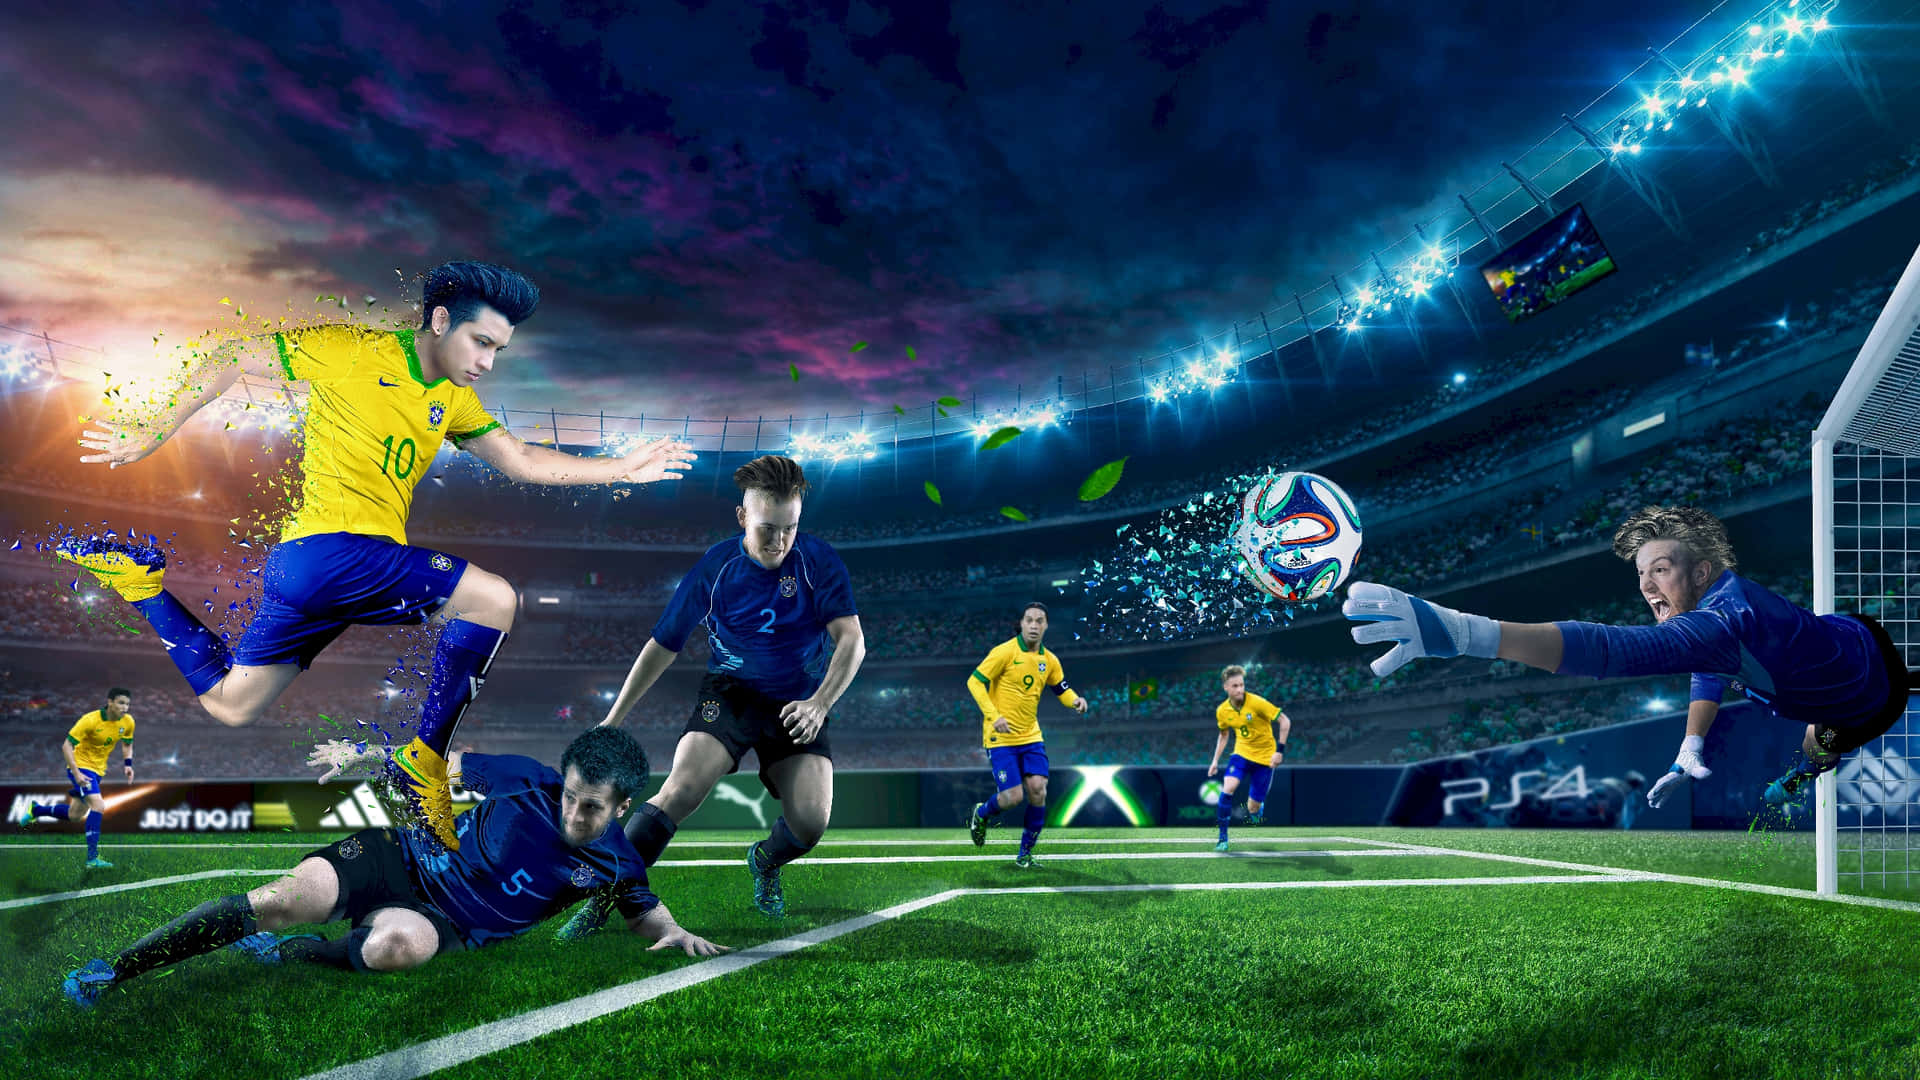 Dynamic Soccer Action Stadium Wallpaper